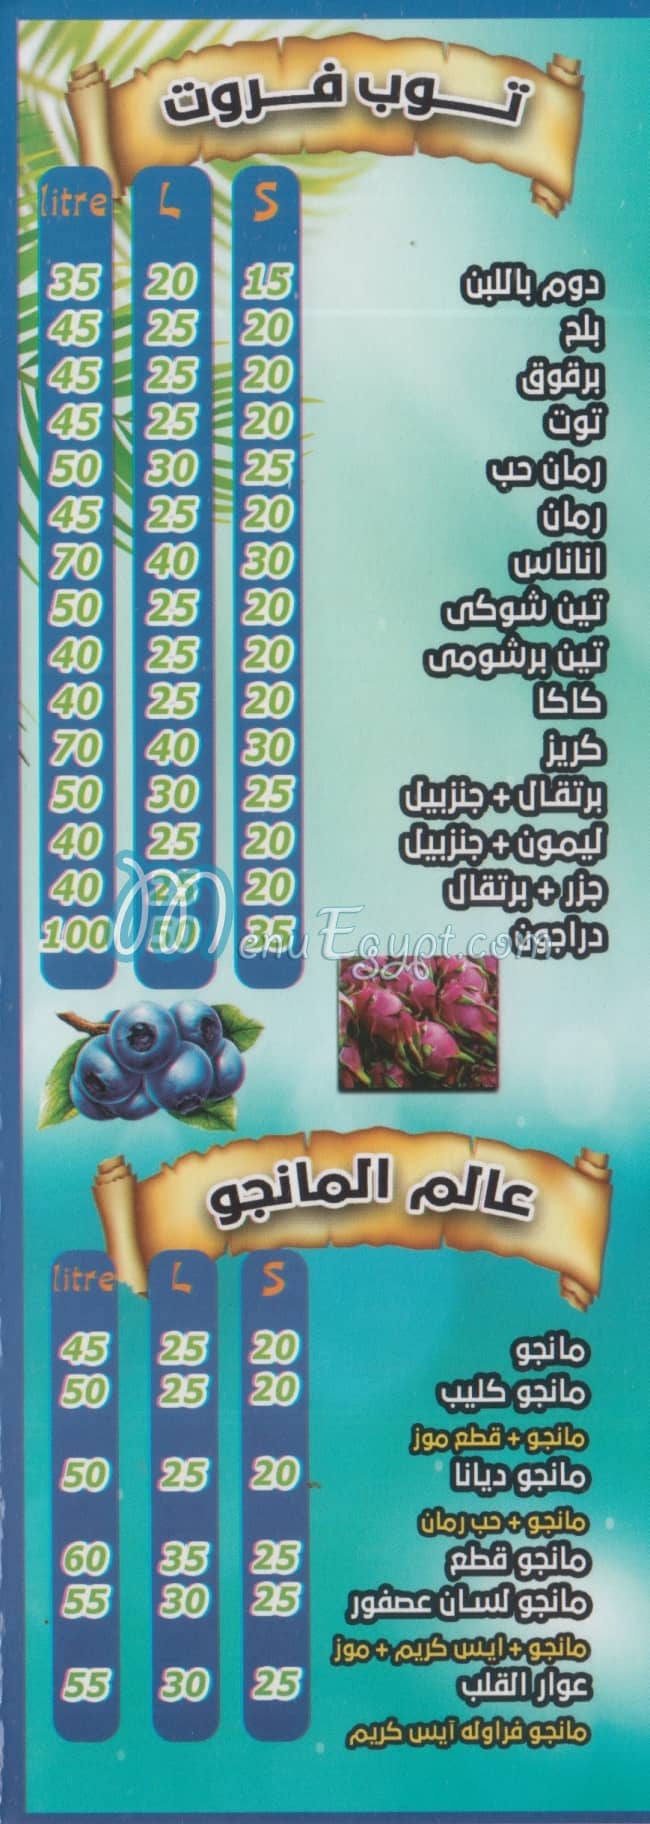 Top Fruit egypt